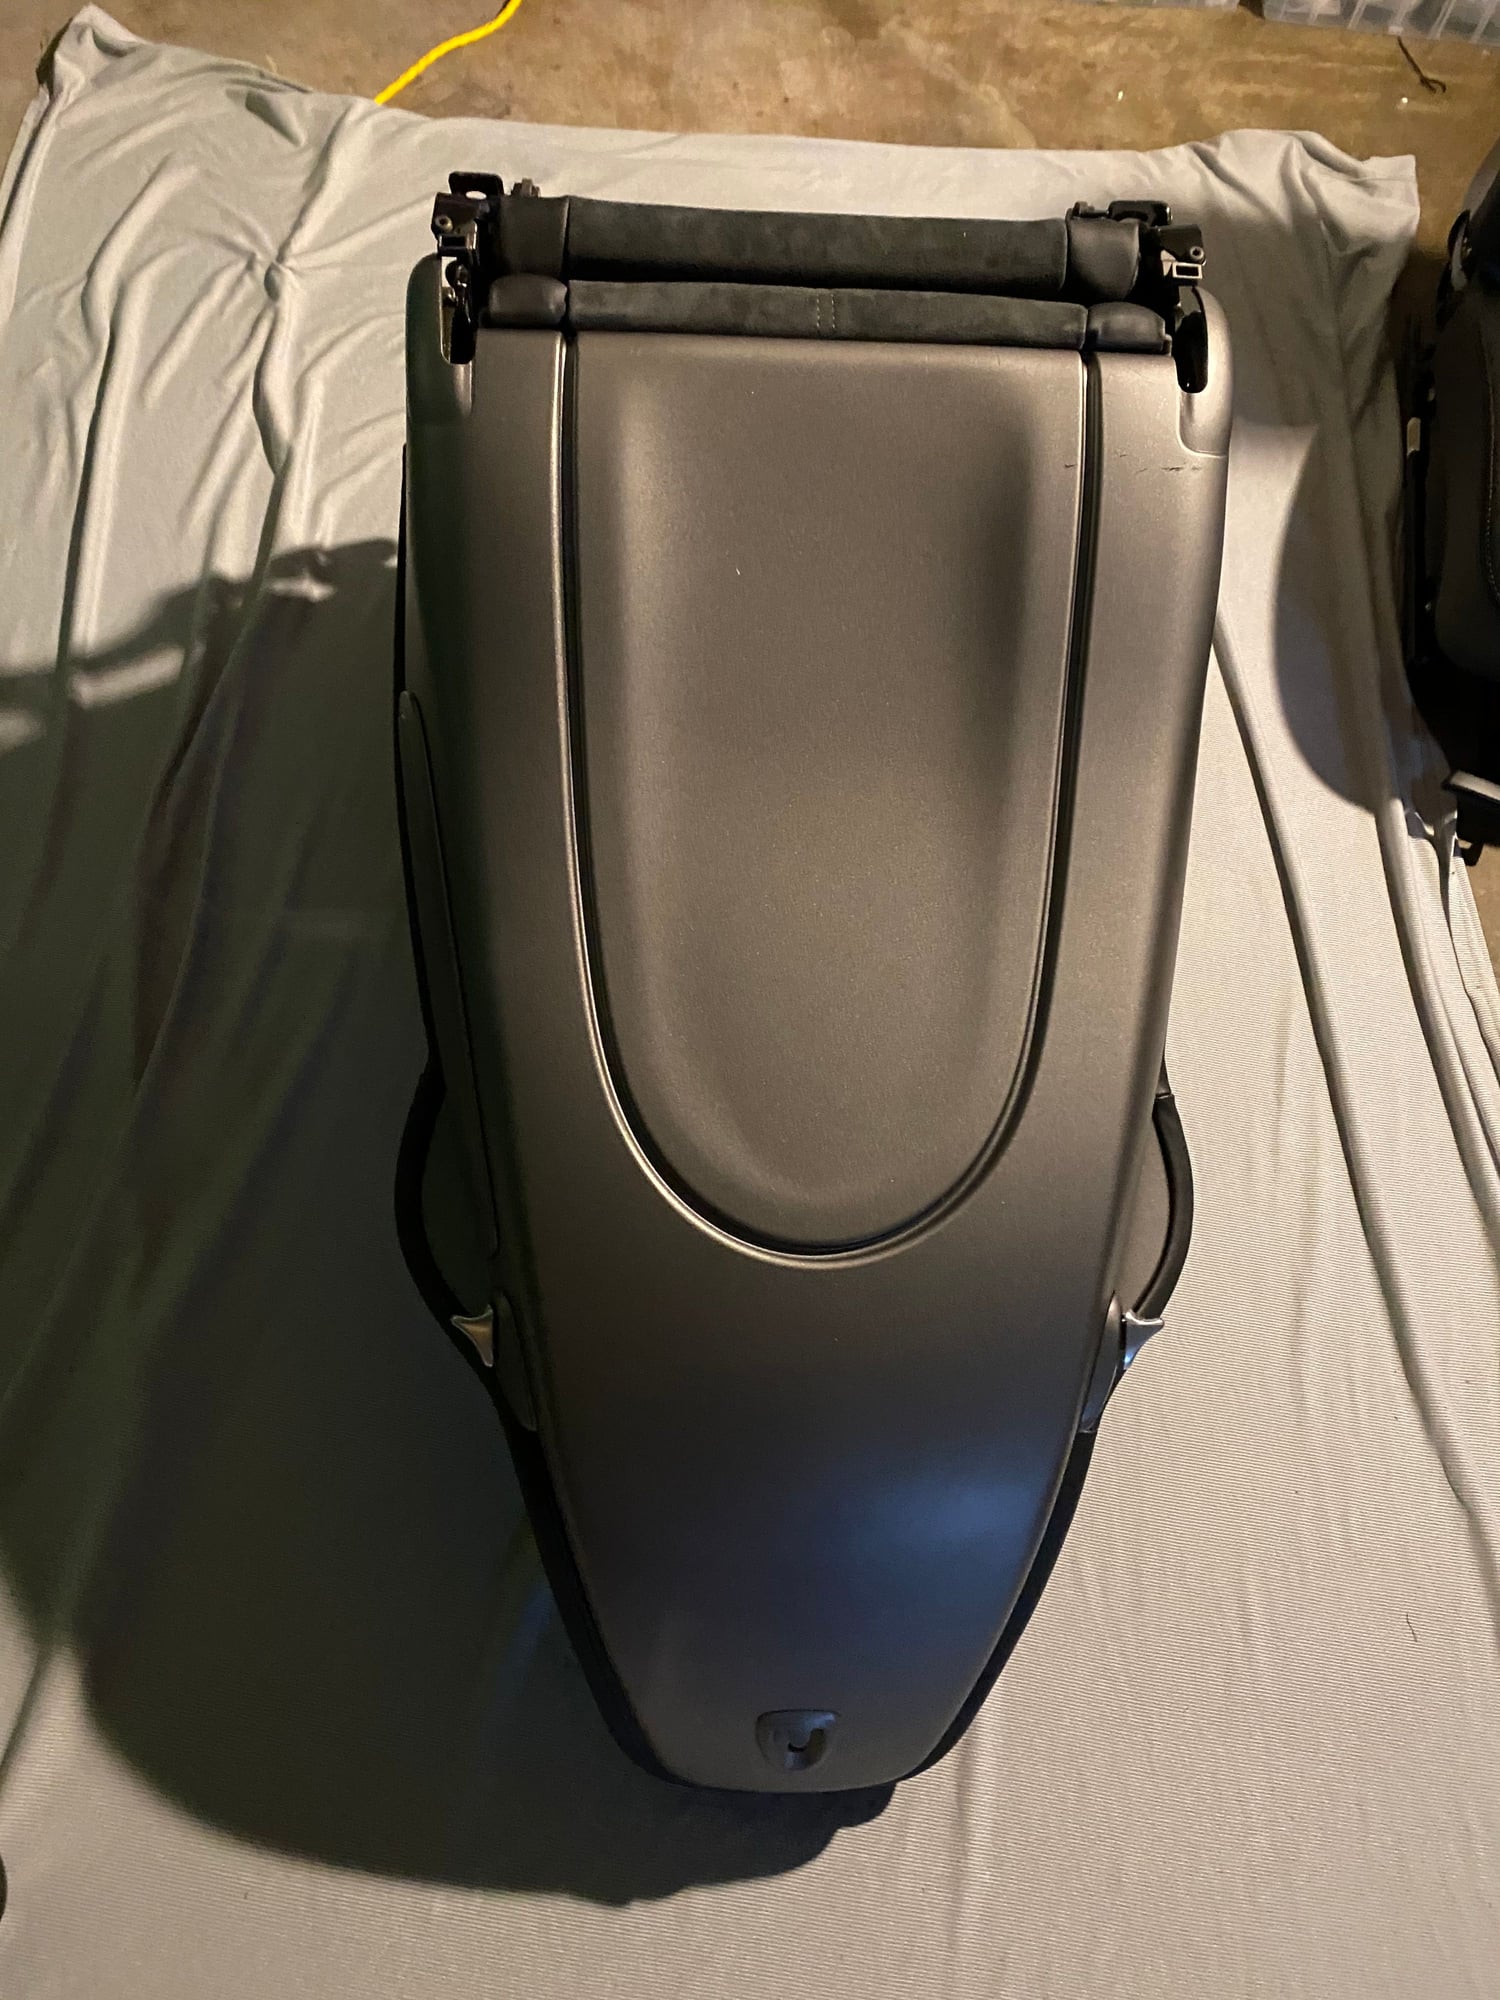 Interior/Upholstery - Stock 997.2 GT3 Alcantara seats - Used - 2010 Porsche GT3 - San Francisco, CA 94121, United States